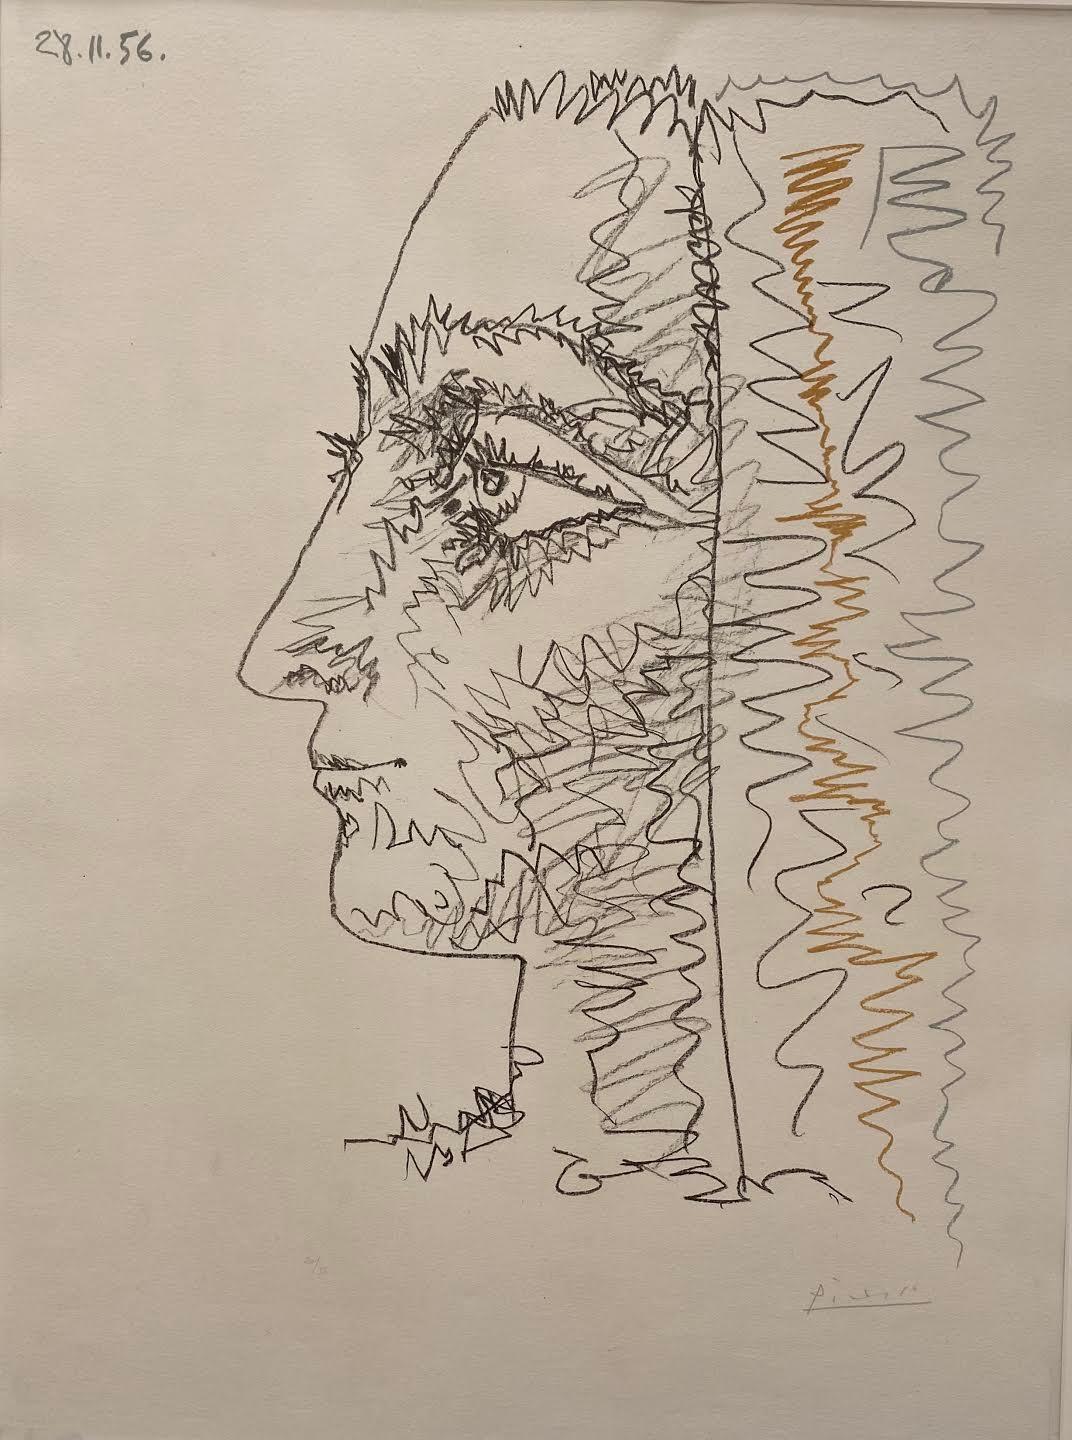 Pablo Picasso, "Three Colour Profile", original lithograph, hand signed